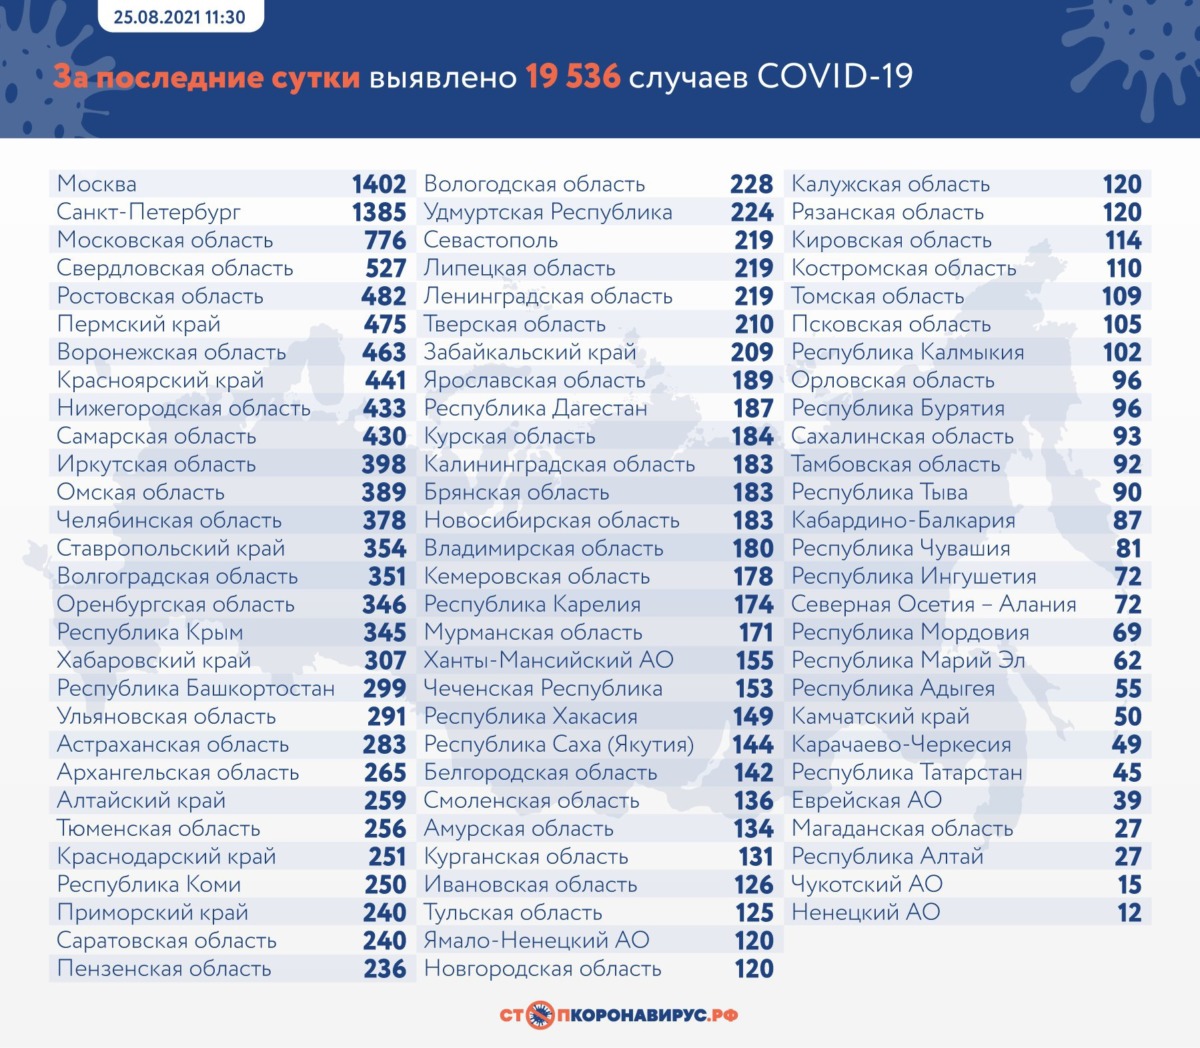 Статистика коронавируса в России на 25 августа